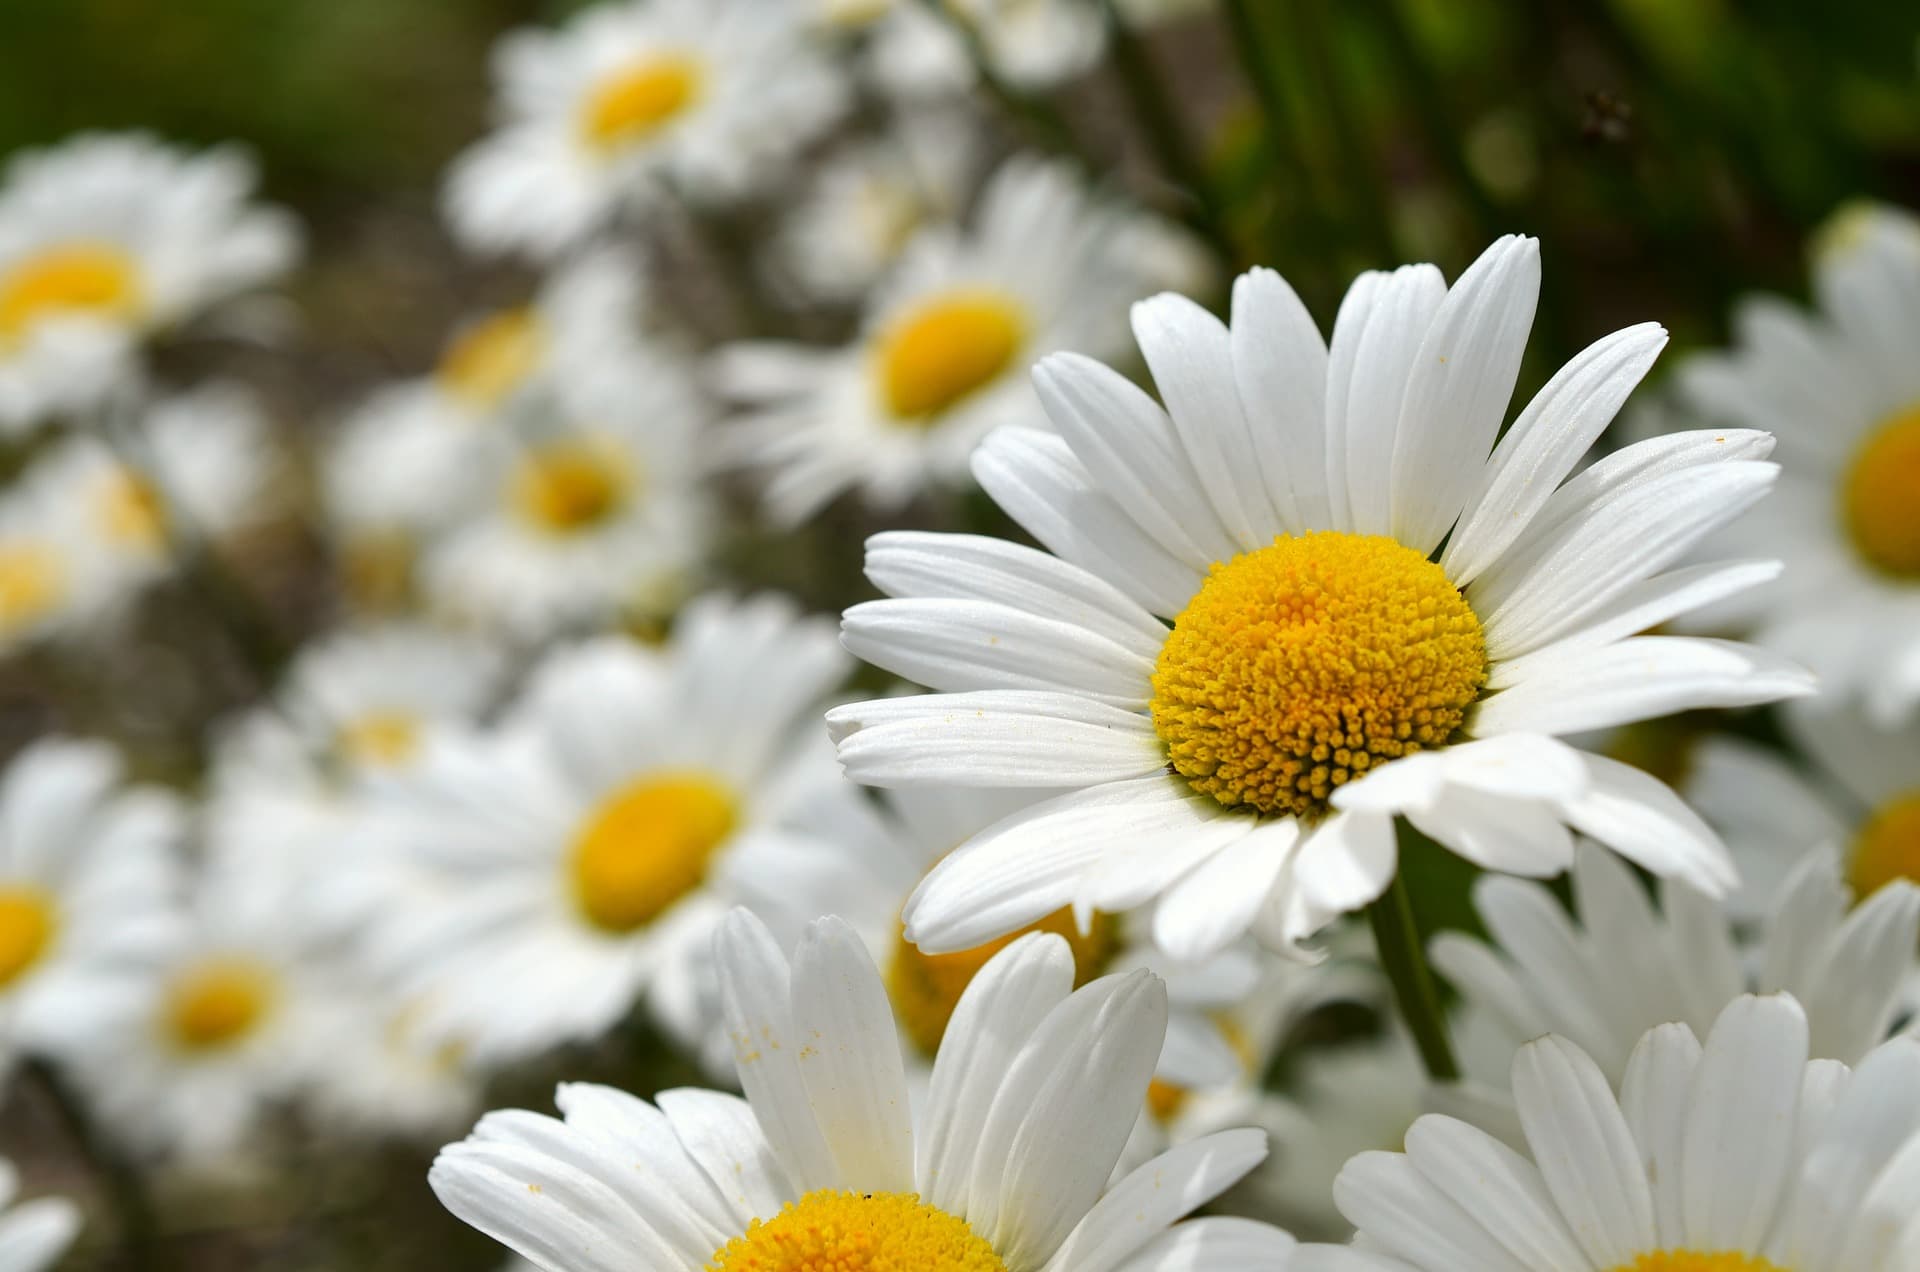 Shasta daisies: white petals surround a yellow center